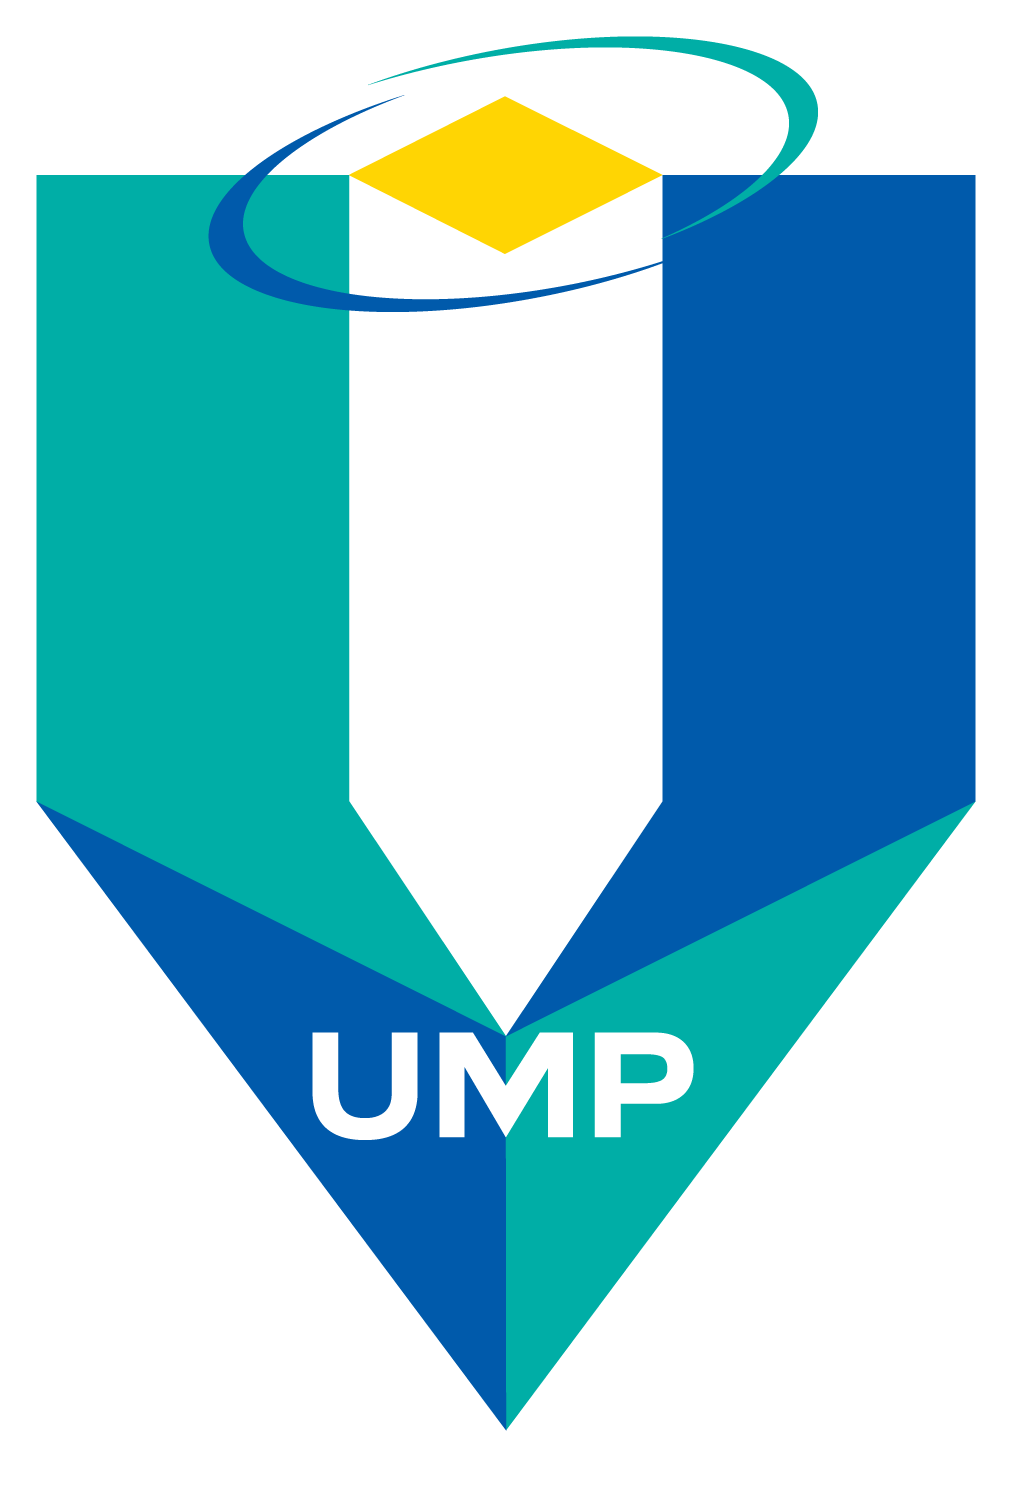 Universiti Malaysia pahang Logo photo - 1